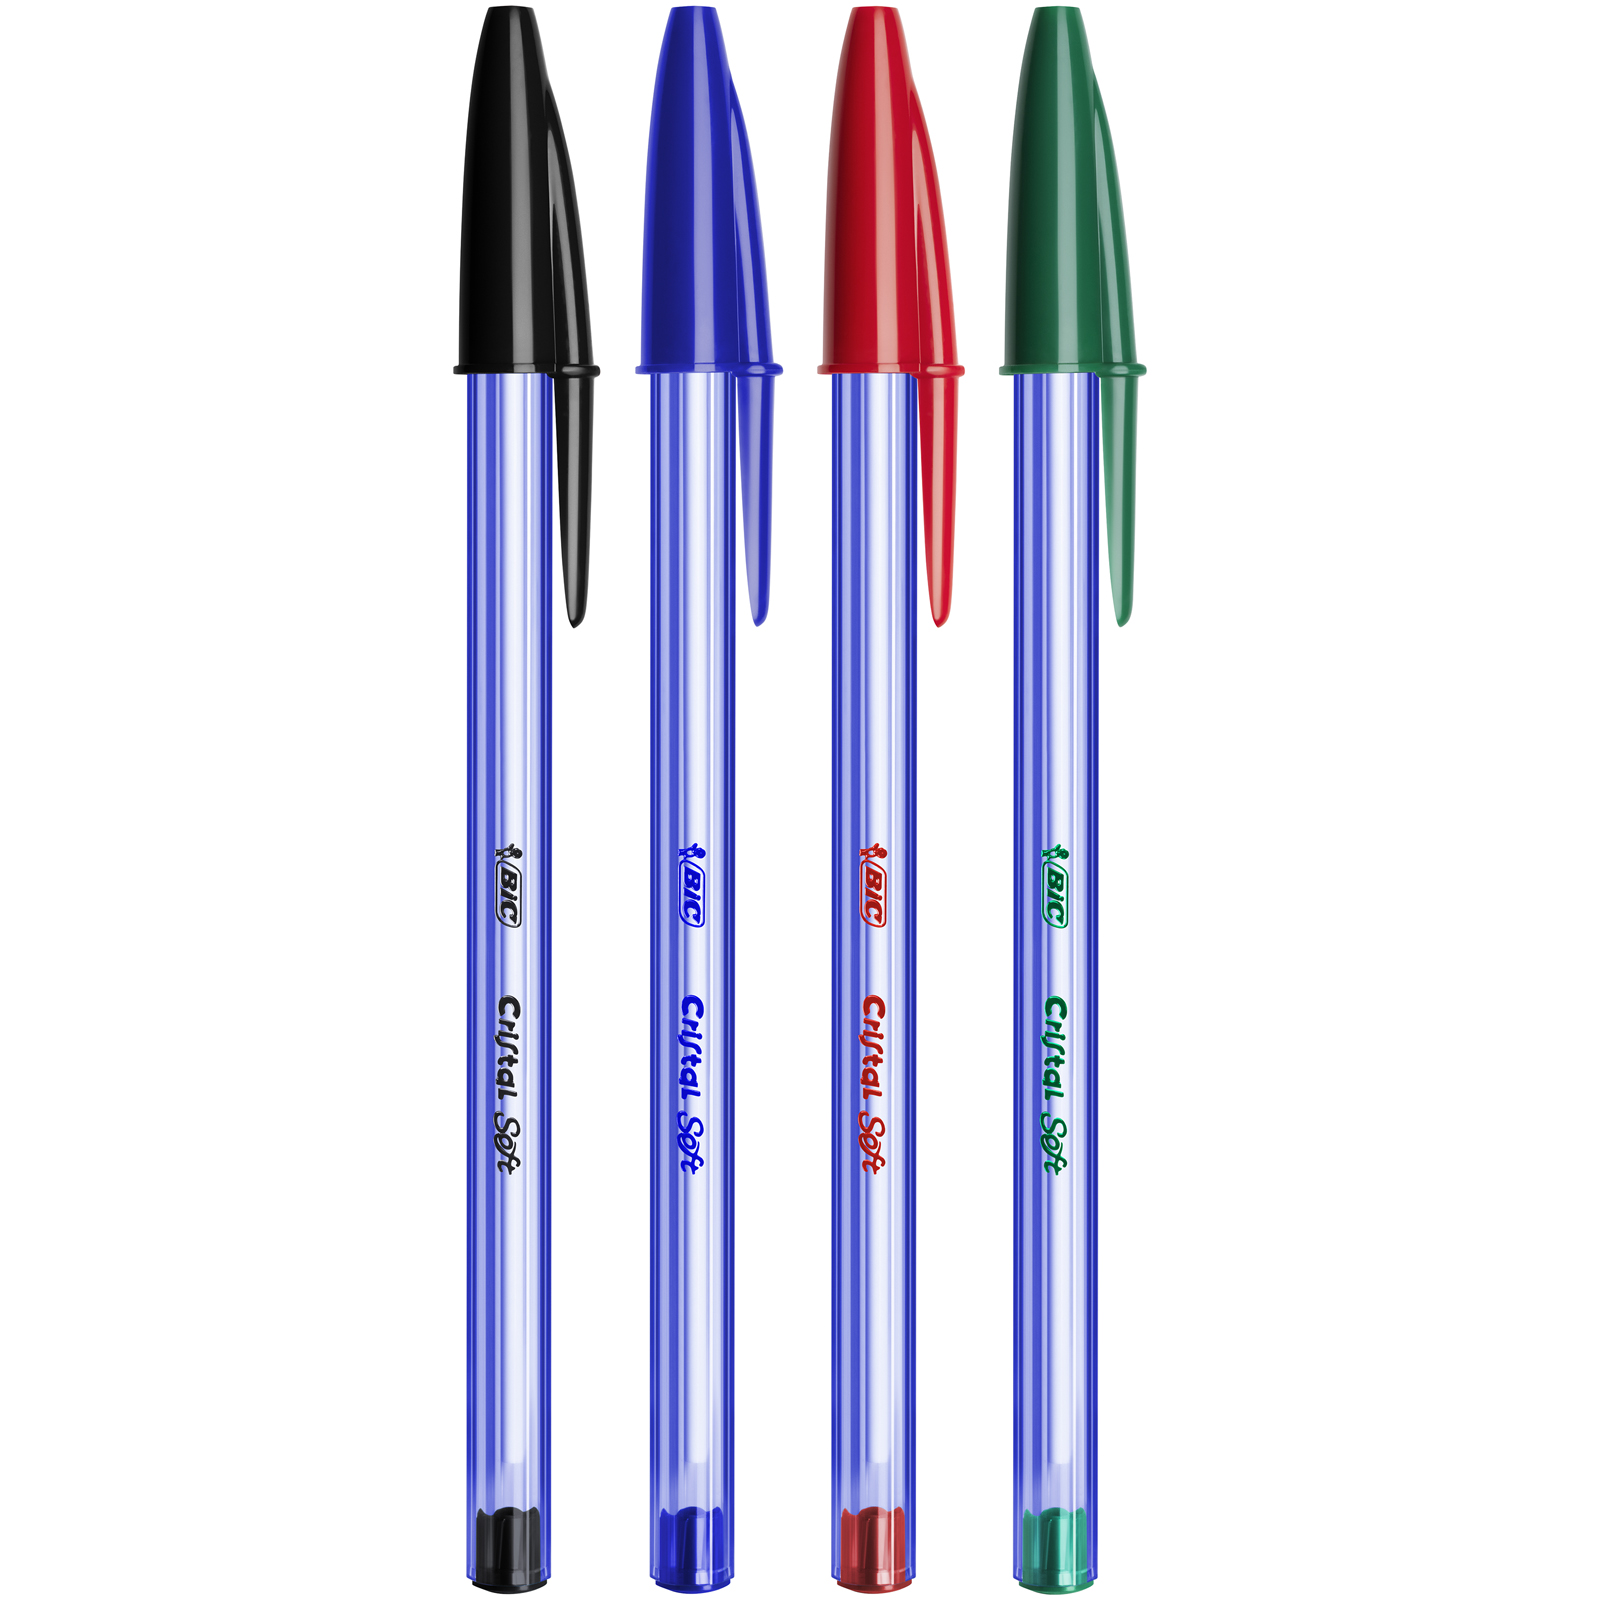 Bic Στυλό  Cristal Soft Μπλε BL4 918527 - Bic